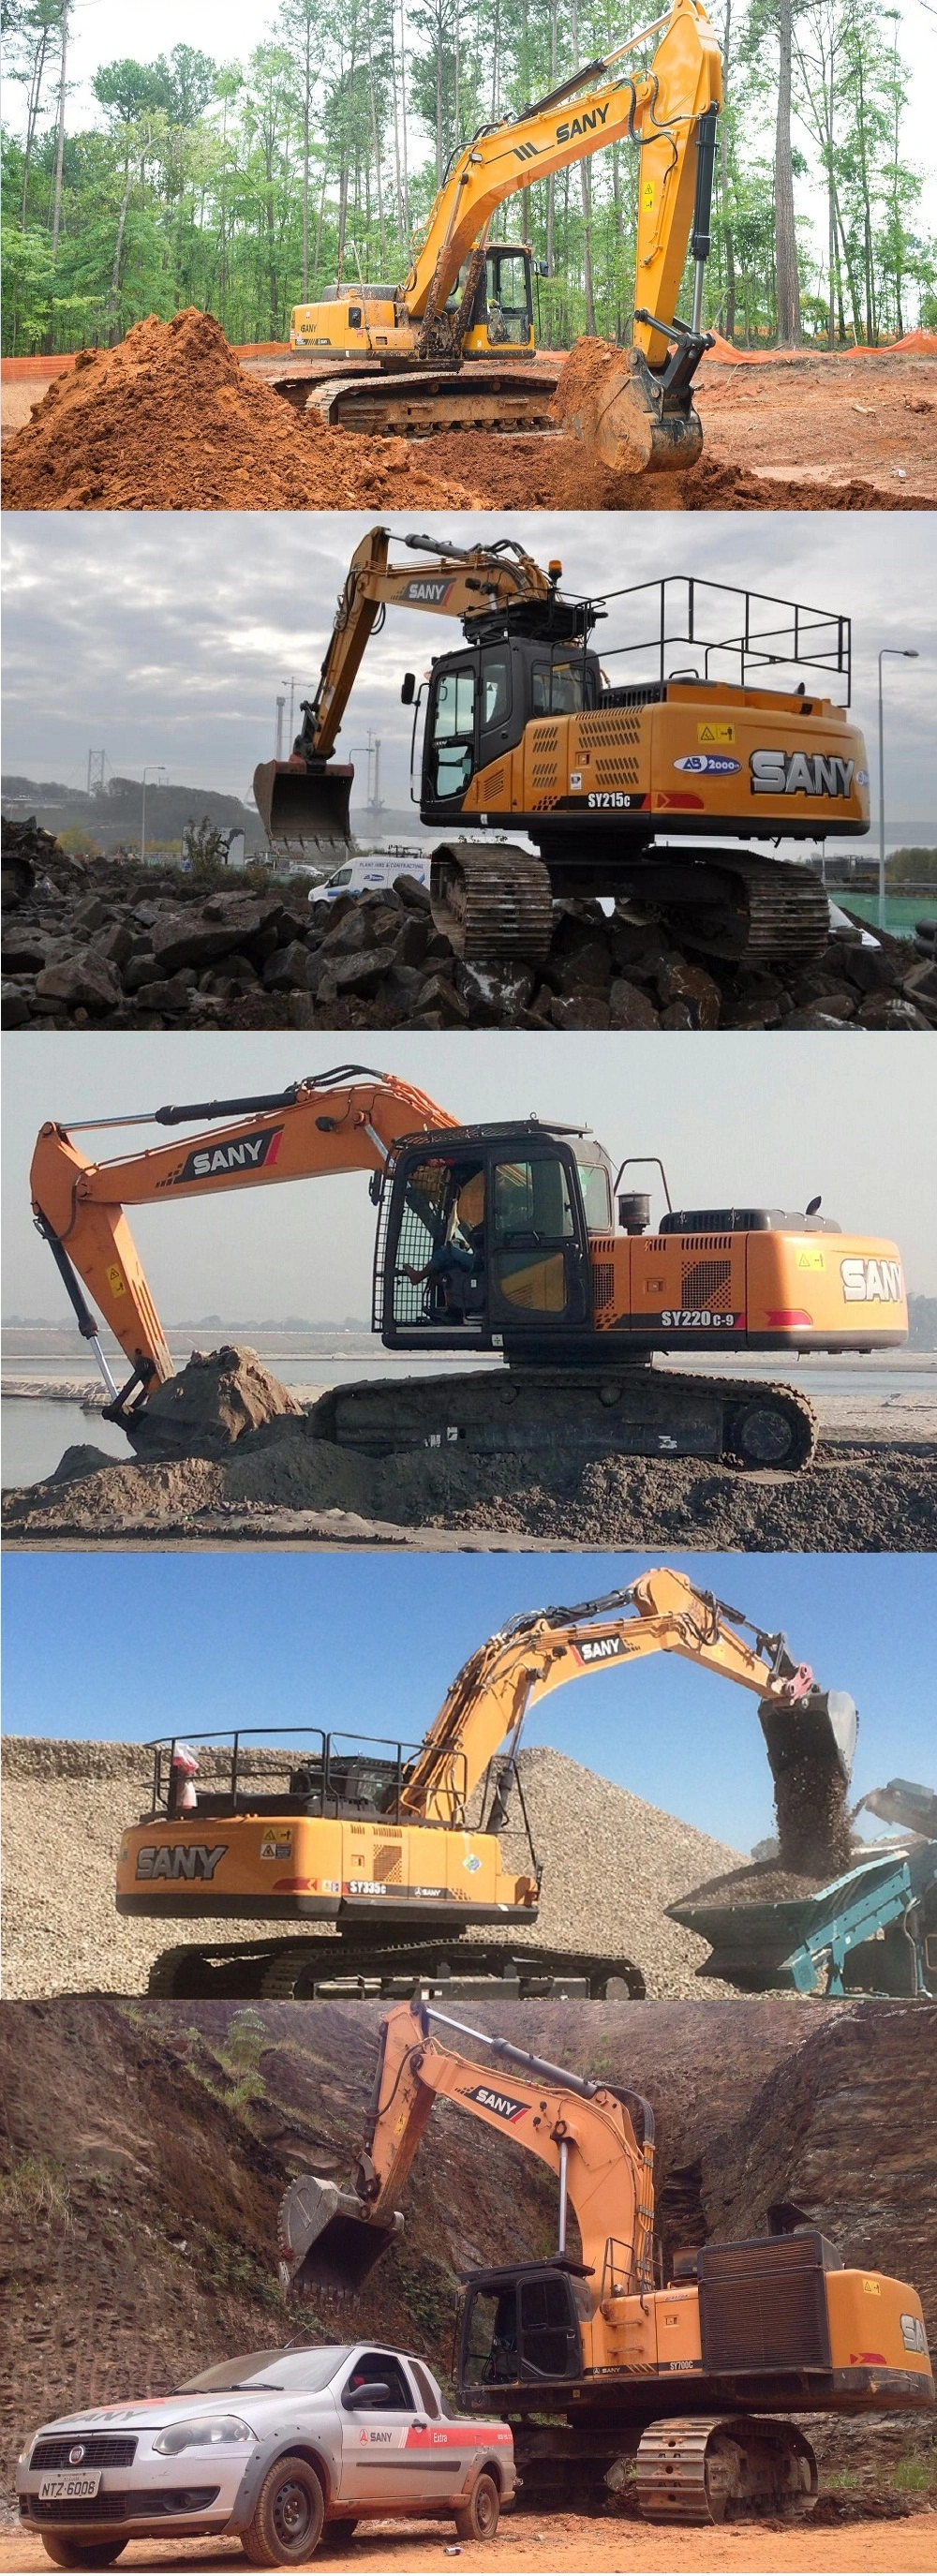 Sany Sy395h 40 Ton Excavator Construction Machinery Large Excavation Equipment Price